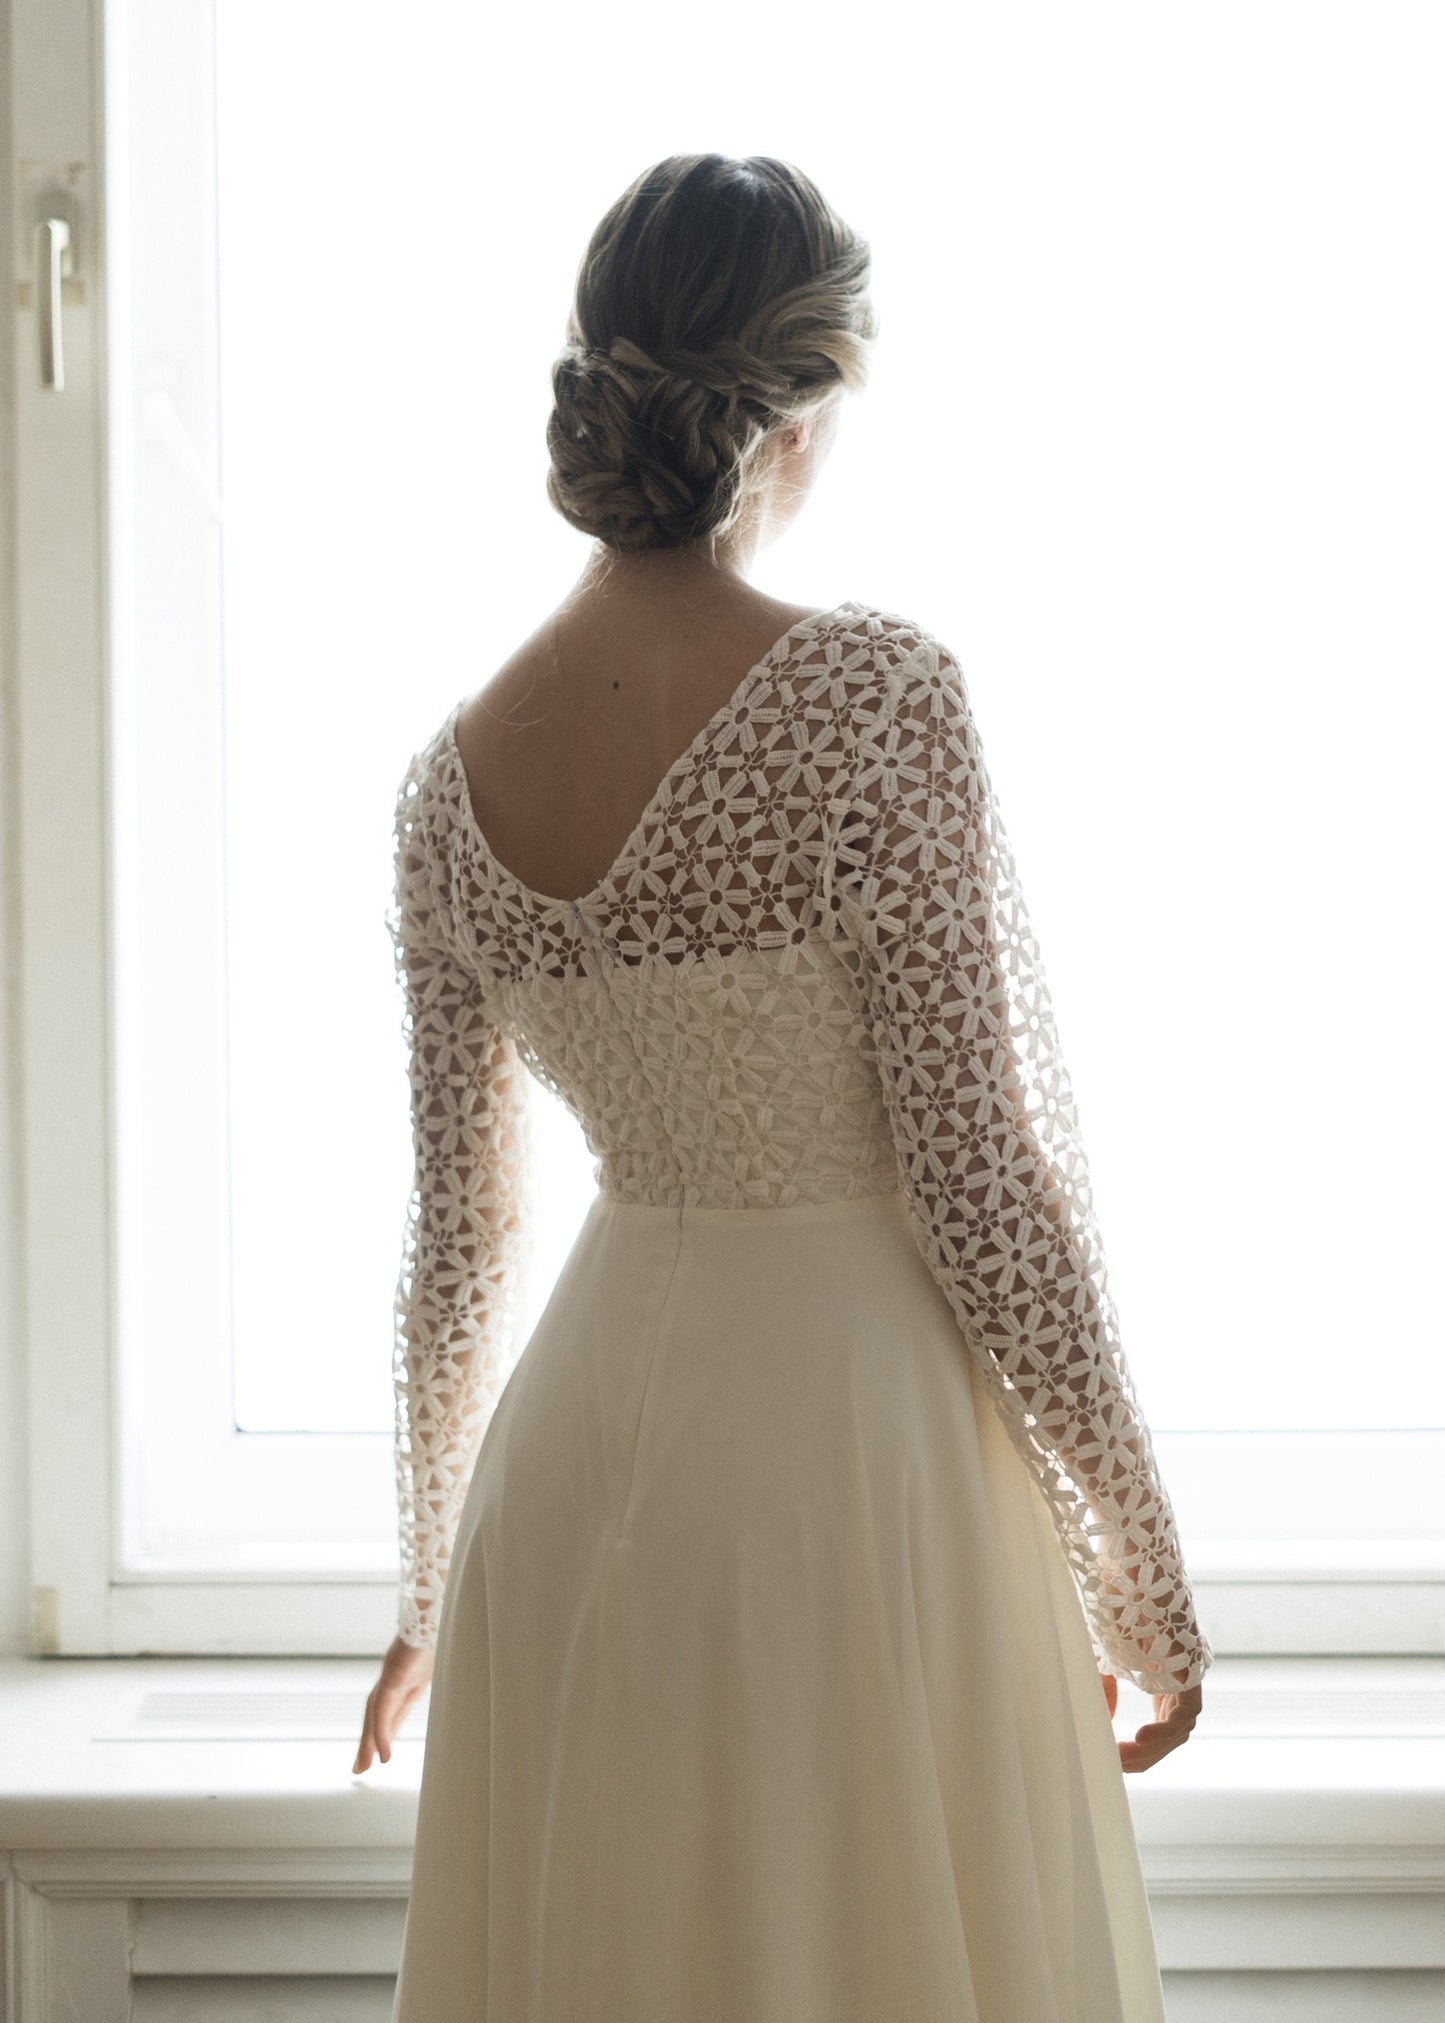 Simple wedding dress • long sleeve wedding dress • boho wedding dress • chiffon wedding dress • elegant bridal gown • lace wedding dress